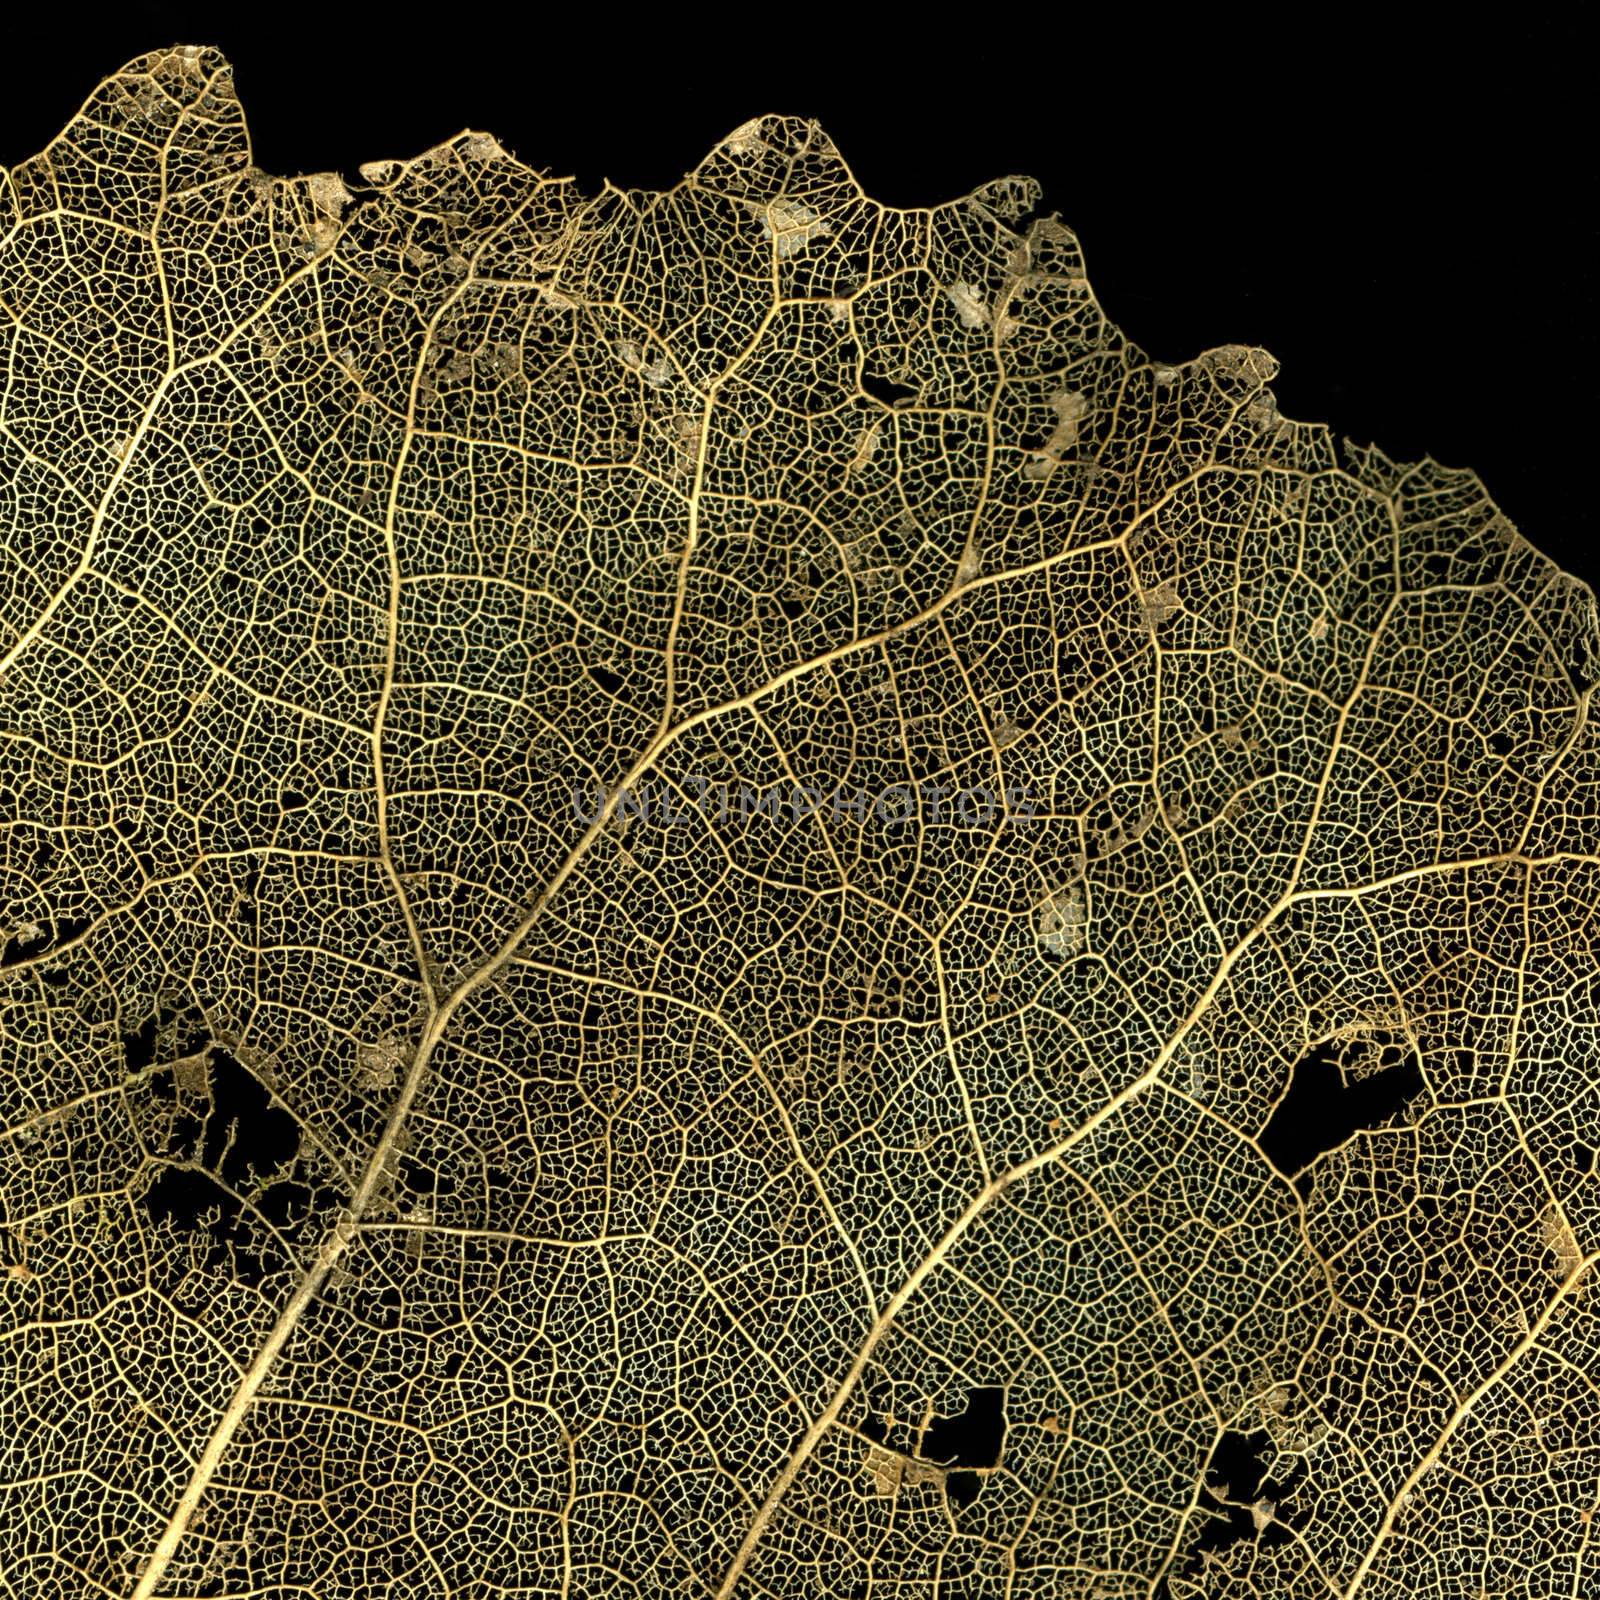 dry poplar tree leaf texture by PixelsAway